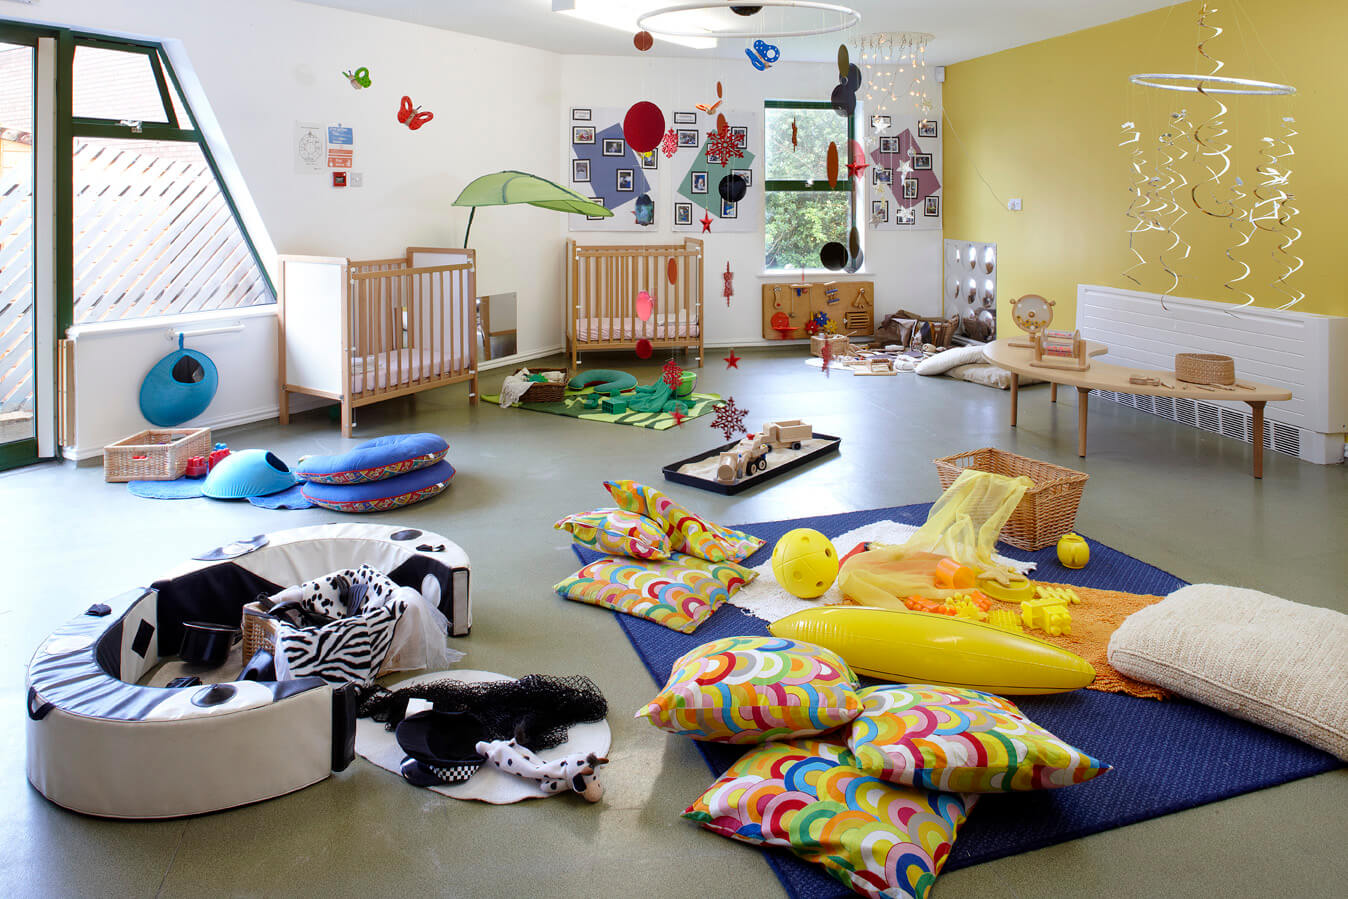 Countess nursery and preschool room